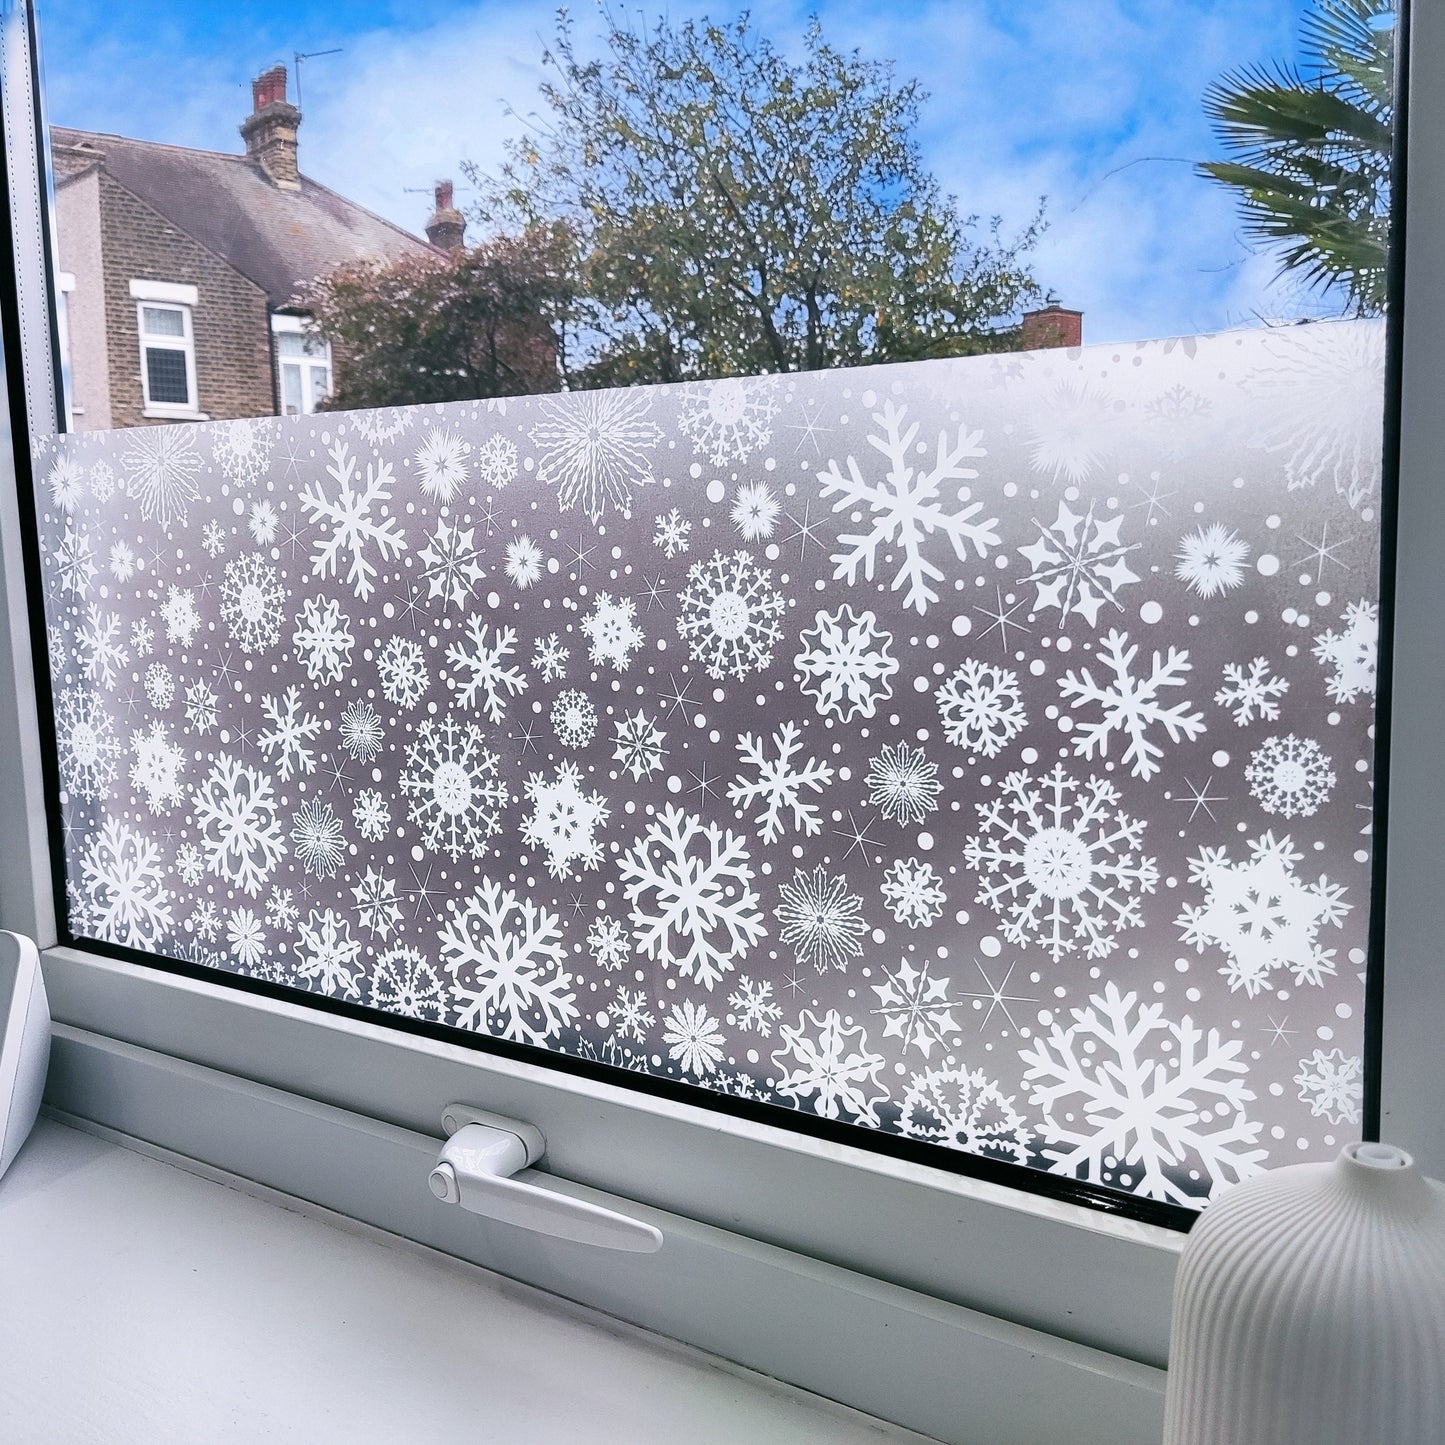 Snow Flakes Christmas Window Decal Sticker - Window Privacy Film Xmas Decorations